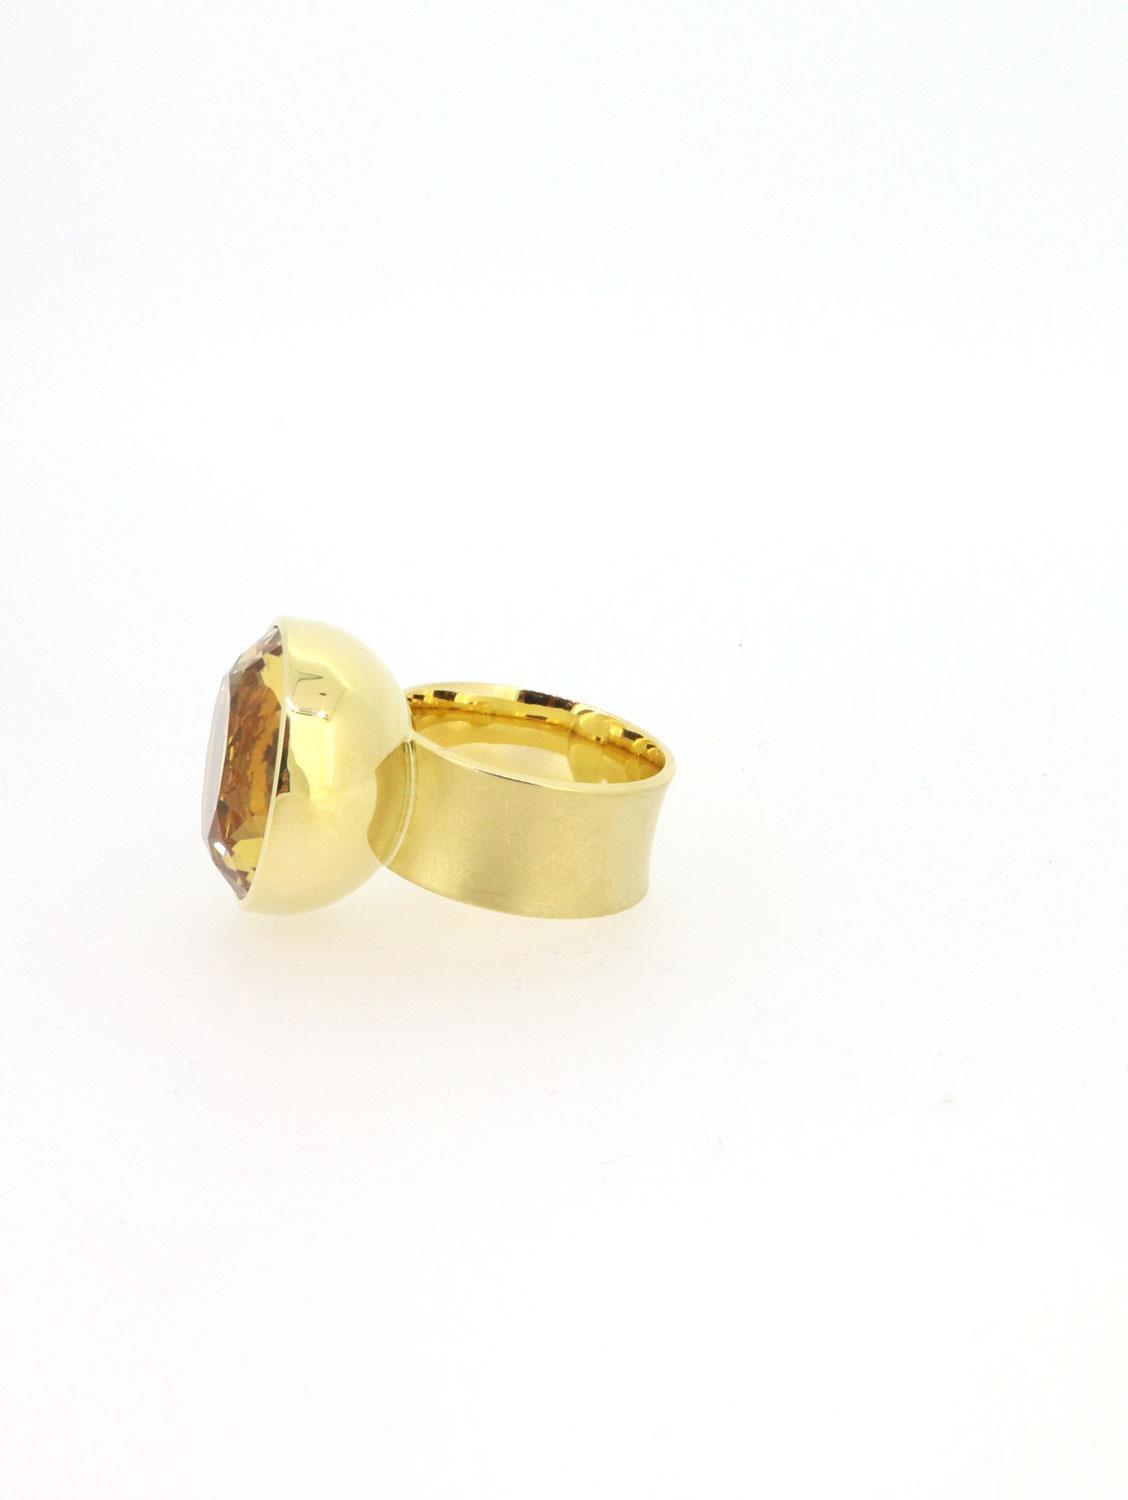 Ring Pokal Gelbgold 20mm Citrin - Georg Spreng - 422spre03-4A